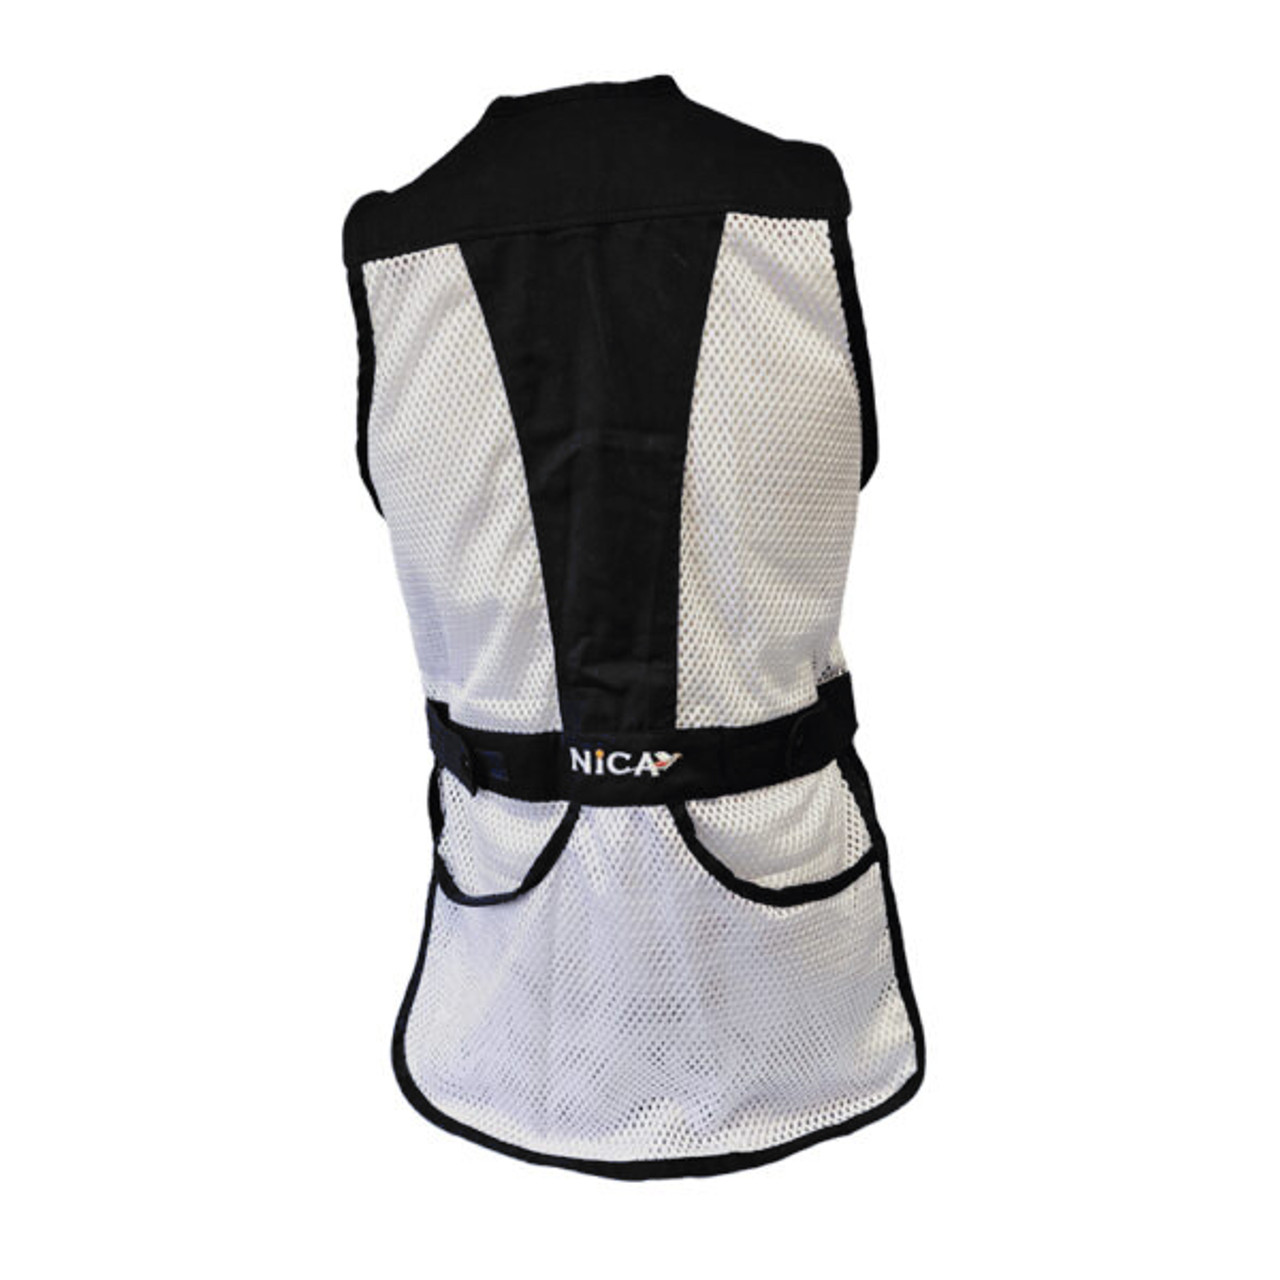 Nica Ambi Shooting Vest 2.0- Black- Back